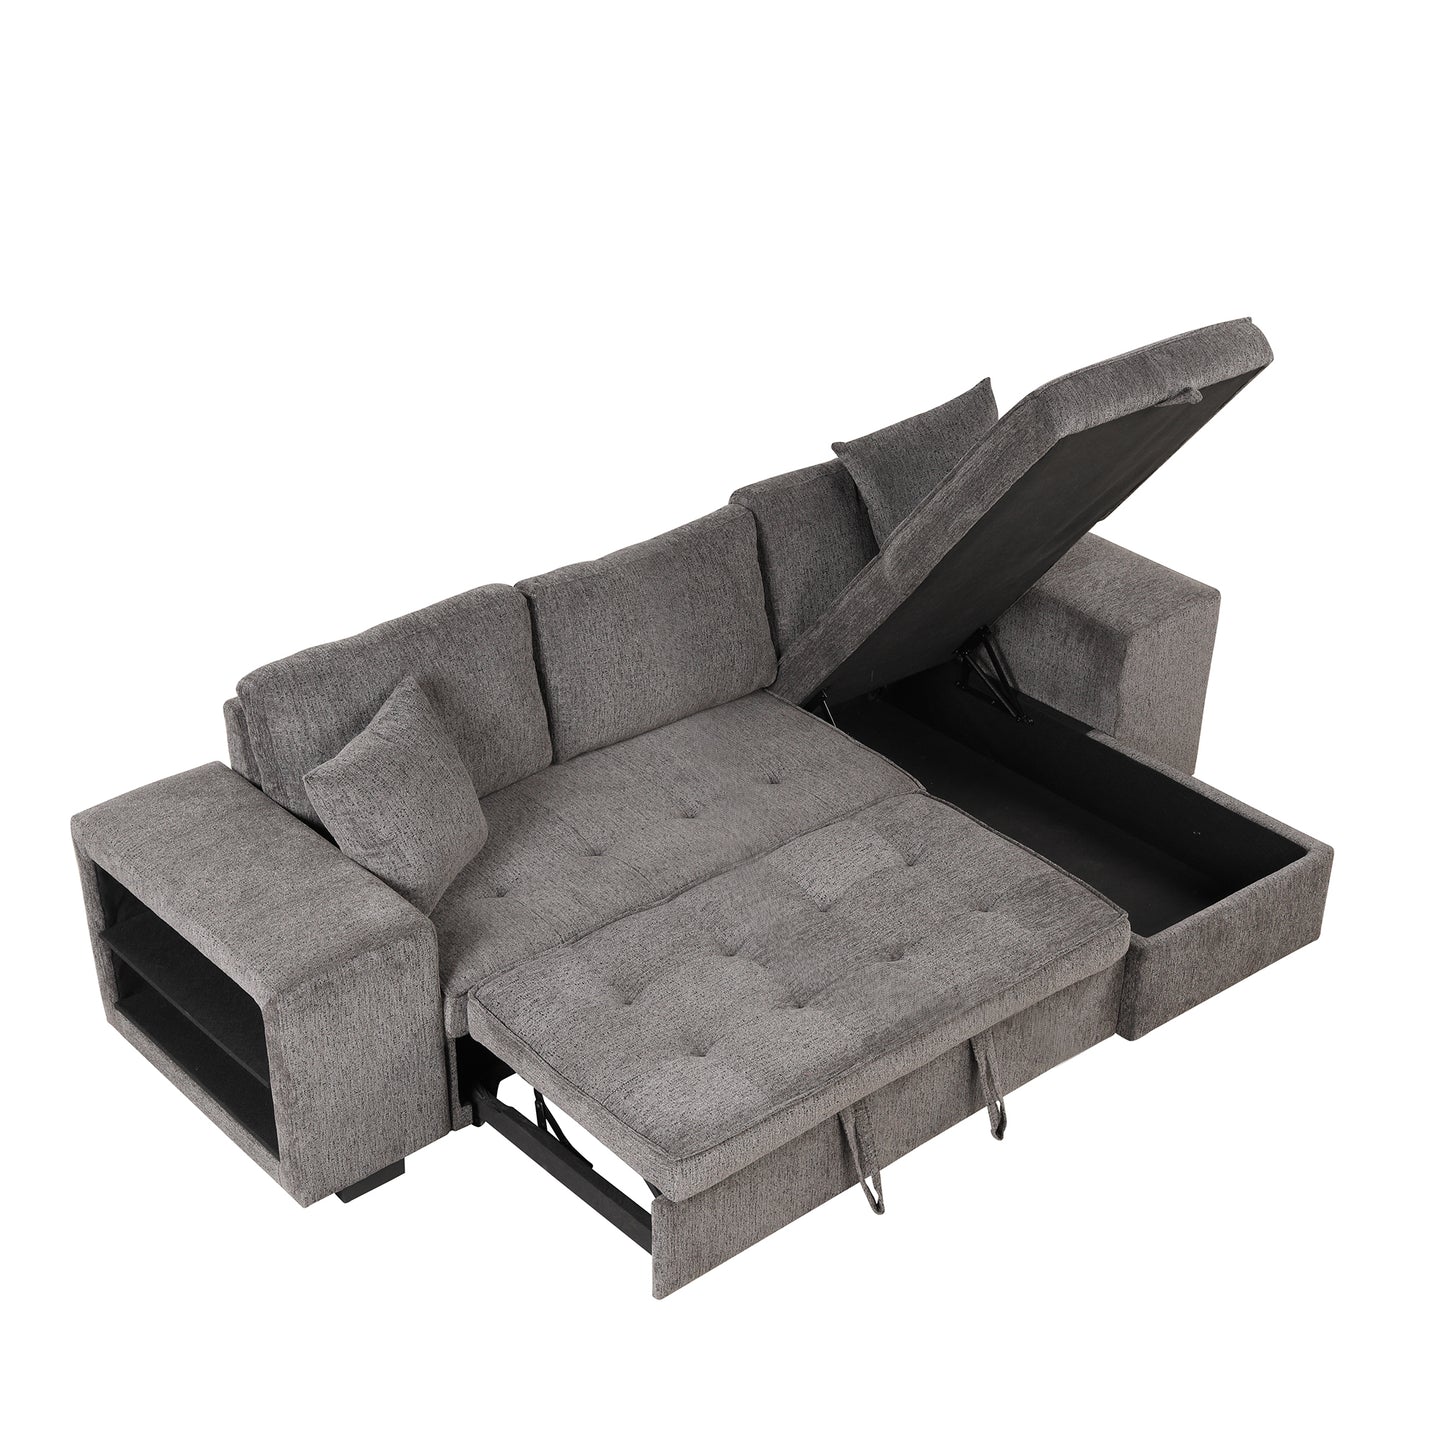 Sectional, Sleeper Sofa, Storage Chaise, 2 Stools